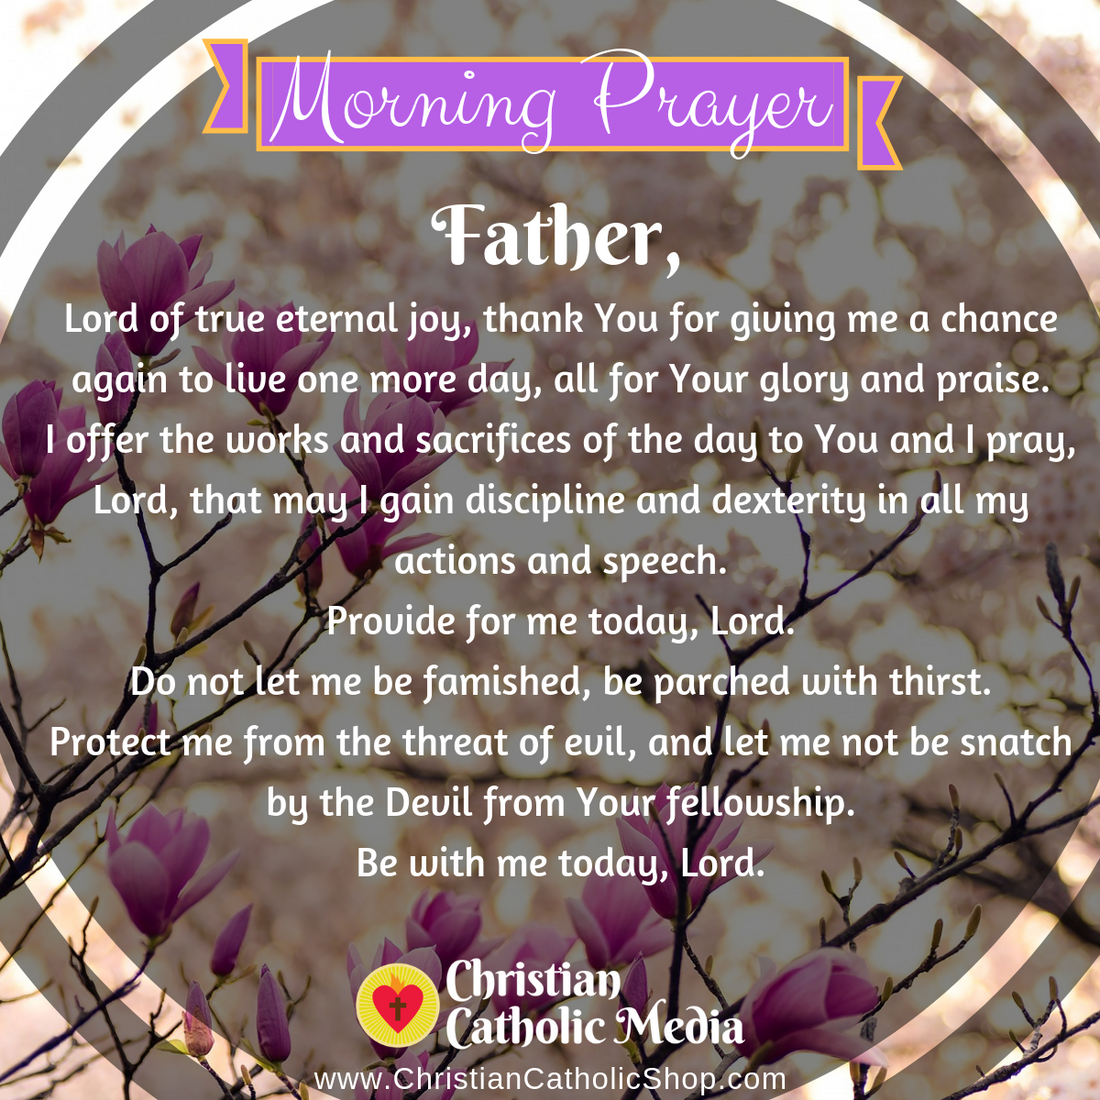 Morning Prayer Catholic Friday 4-17-2020